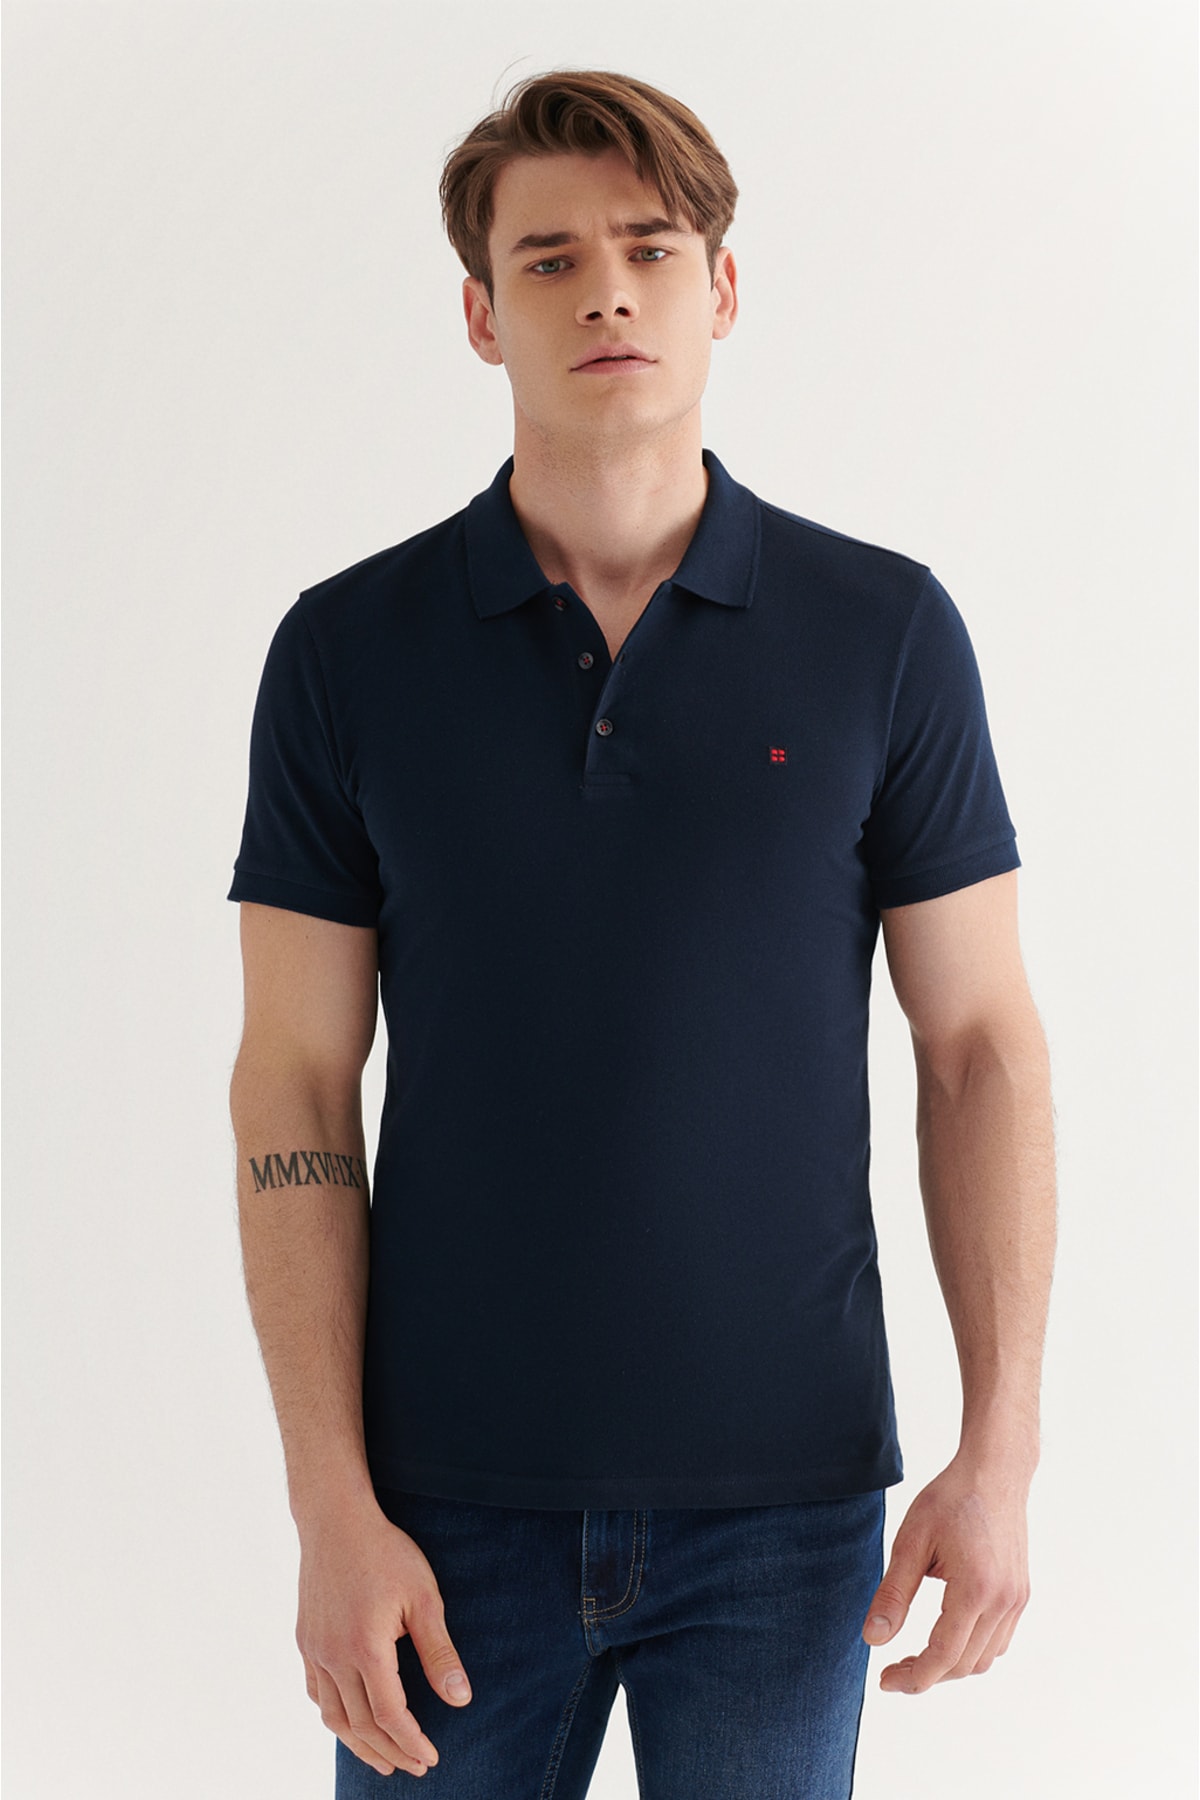 Avva Polo T-shirt - Navy blue - Regular fit